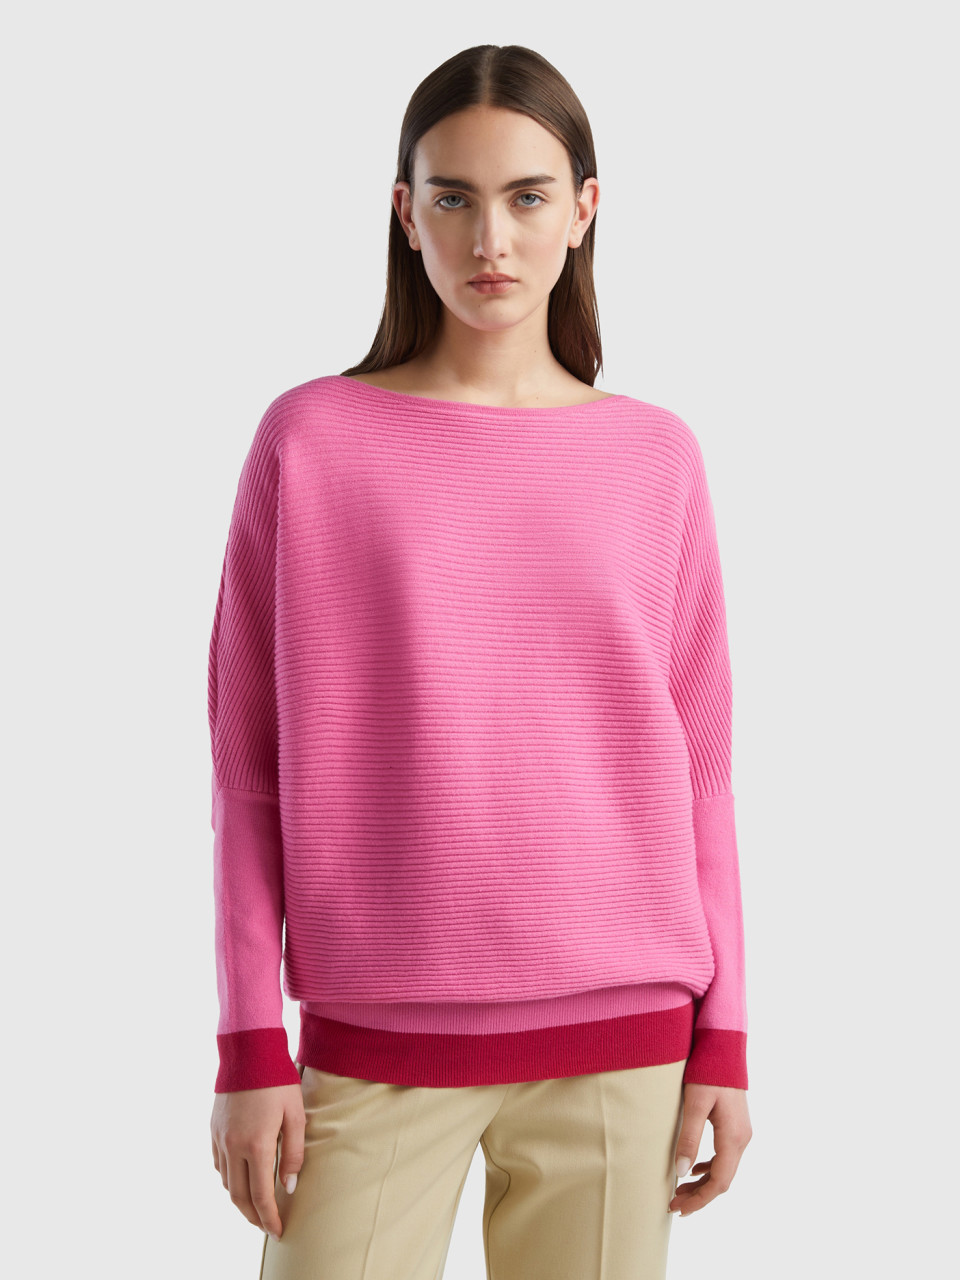 Benetton, Boat Neck Sweater, Pink, Women